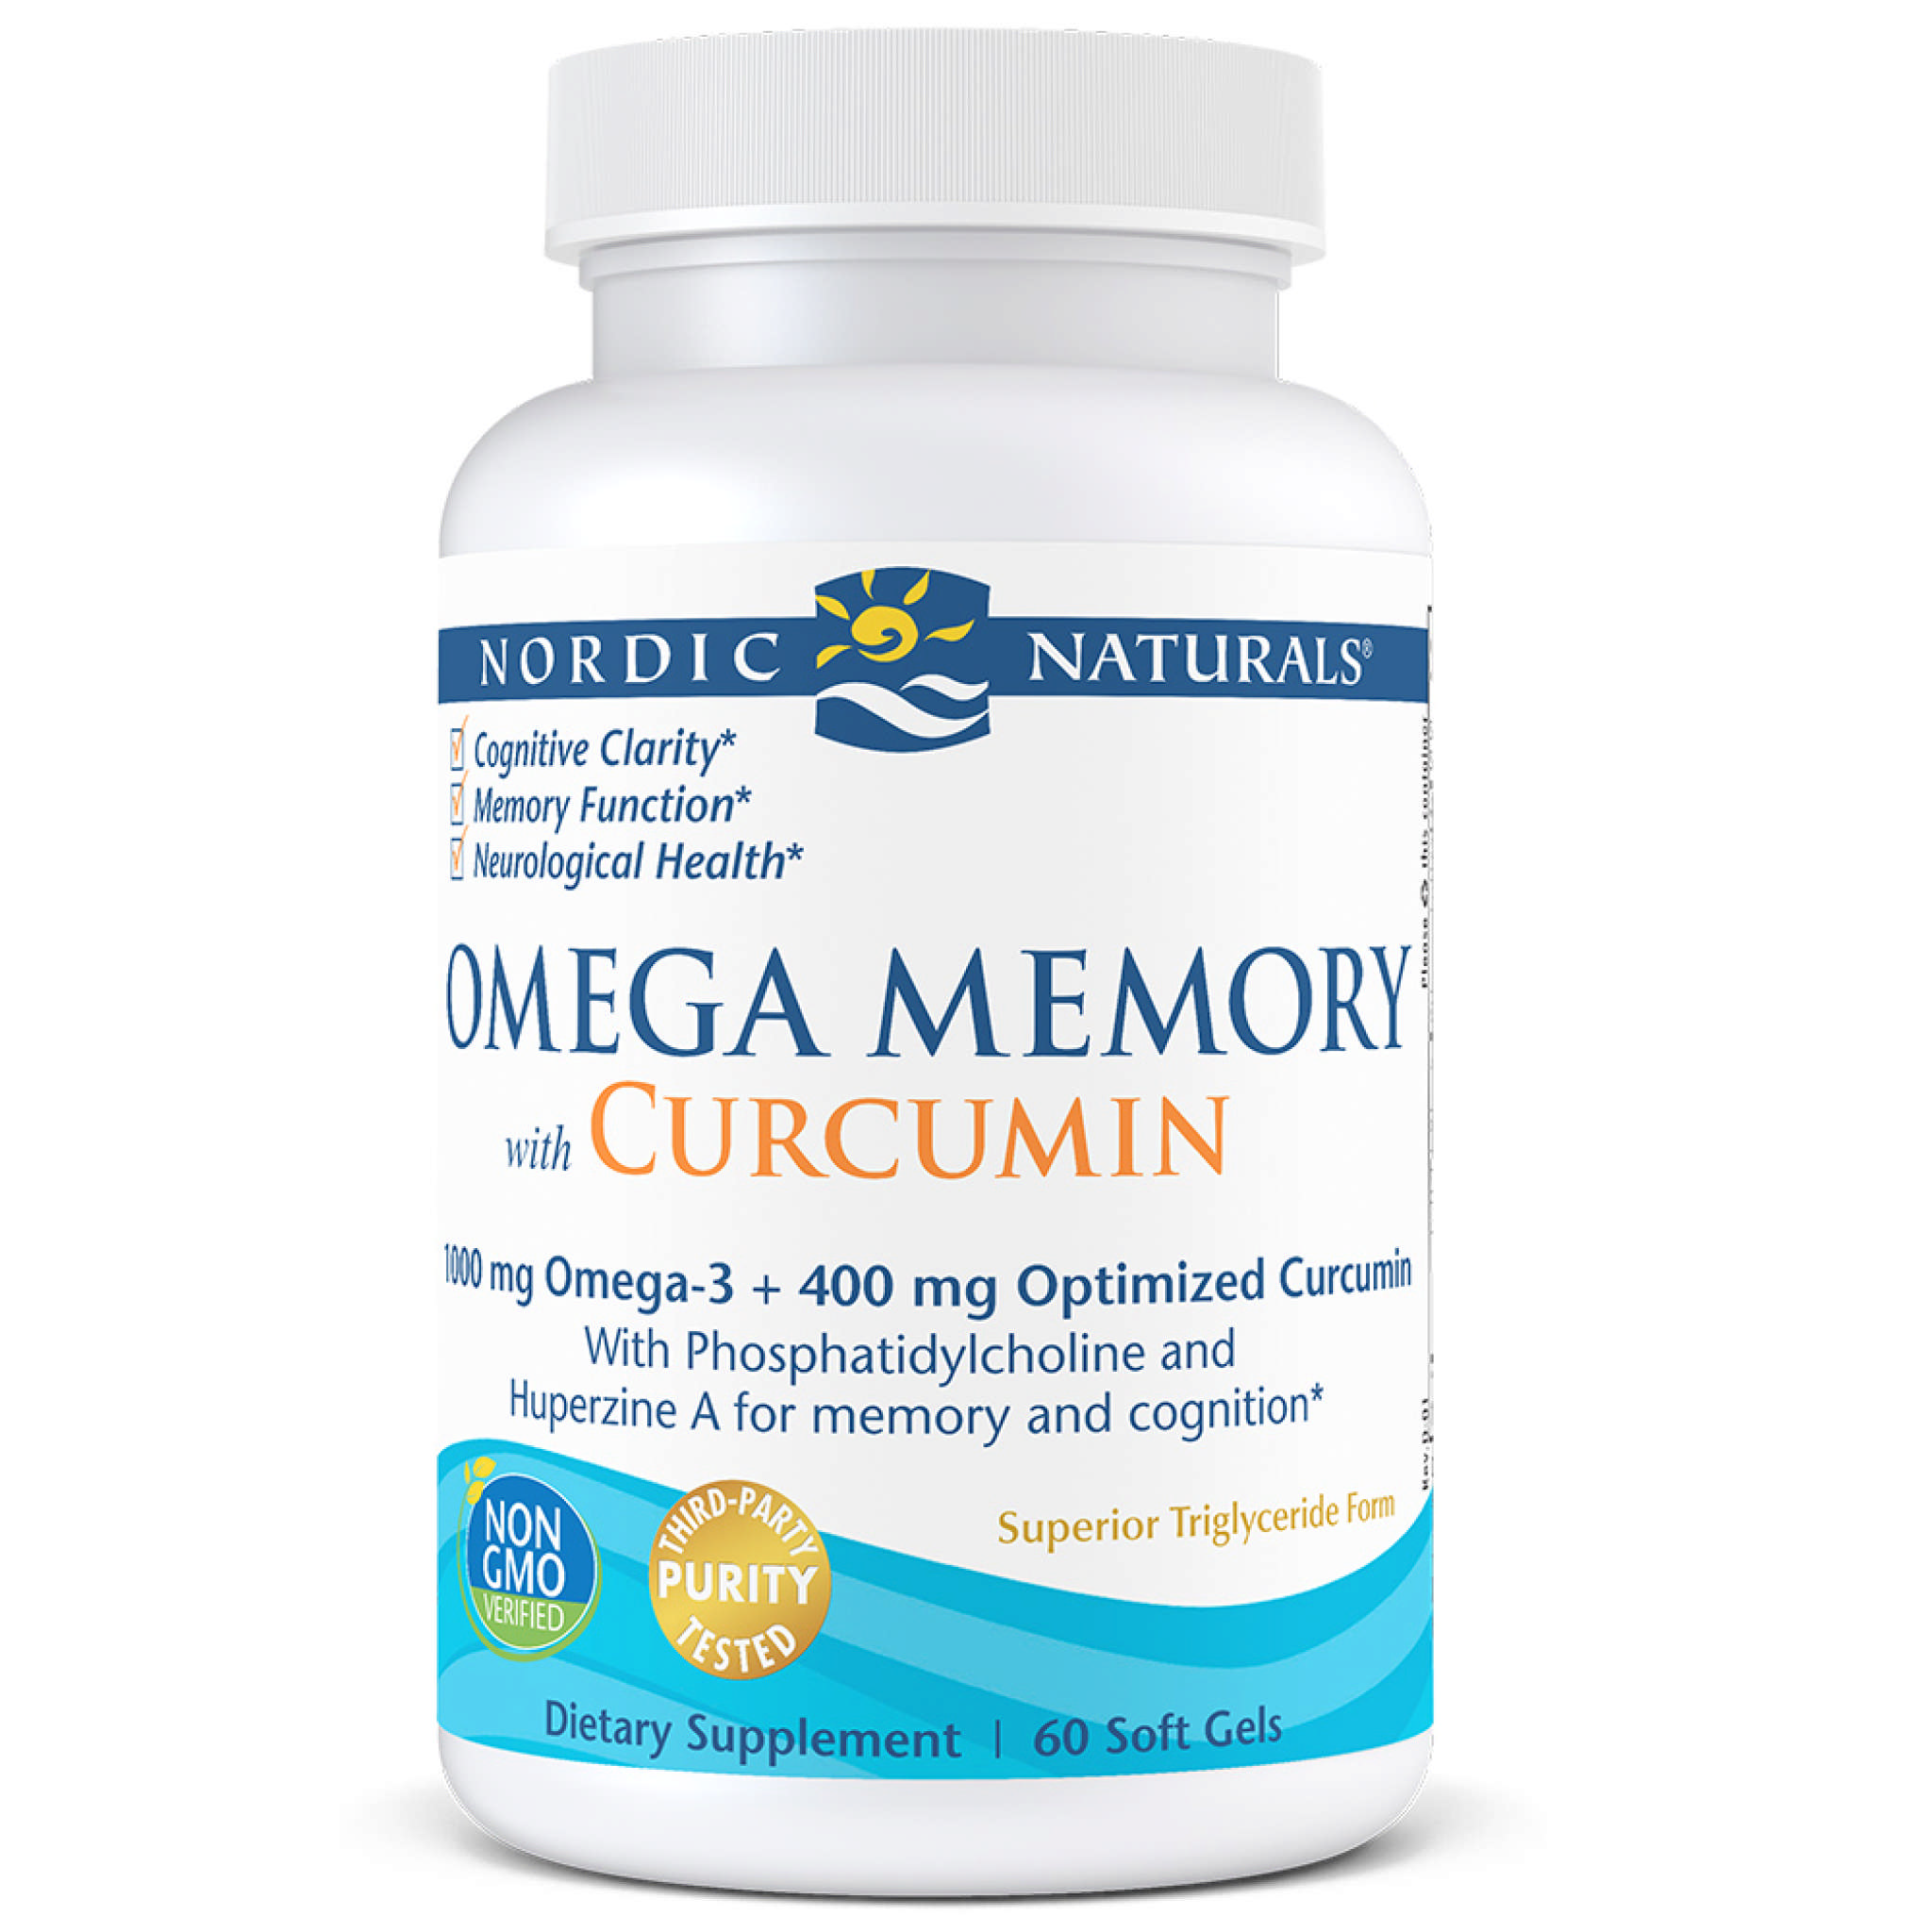 Nordic Naturals - Omega Memory W/Curcumin